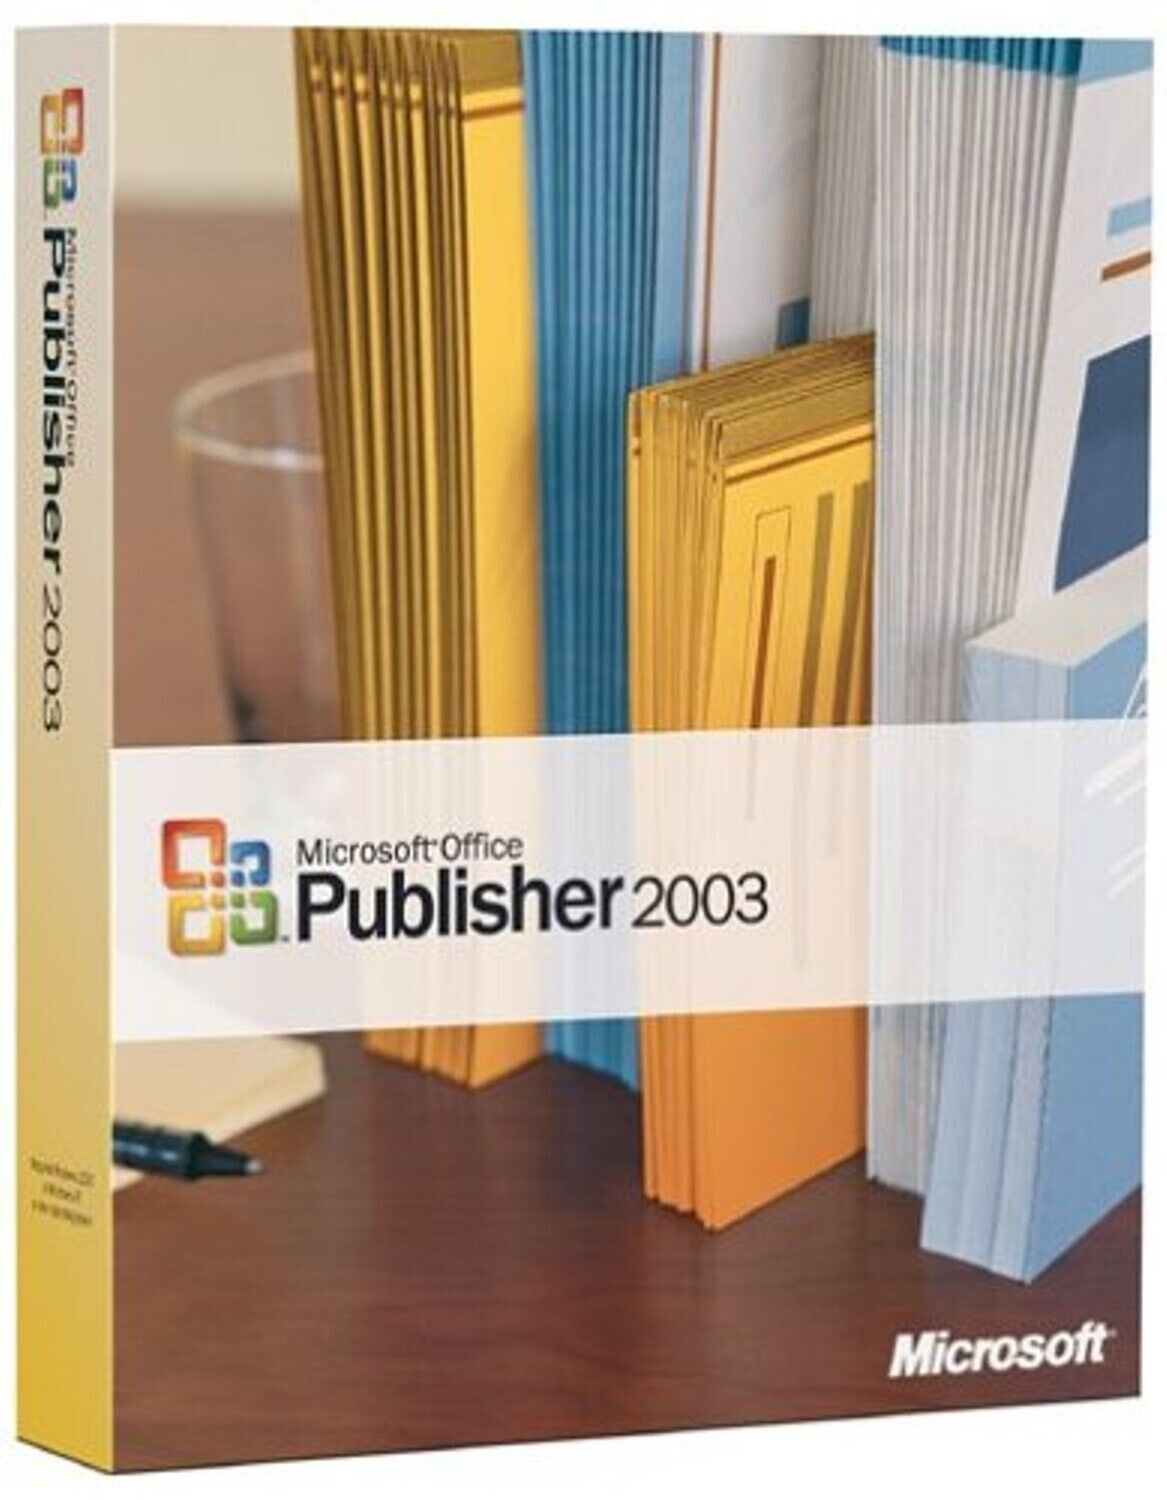 Microsoft Office Publisher 2003 Full Version w/ License & Key = NEW =